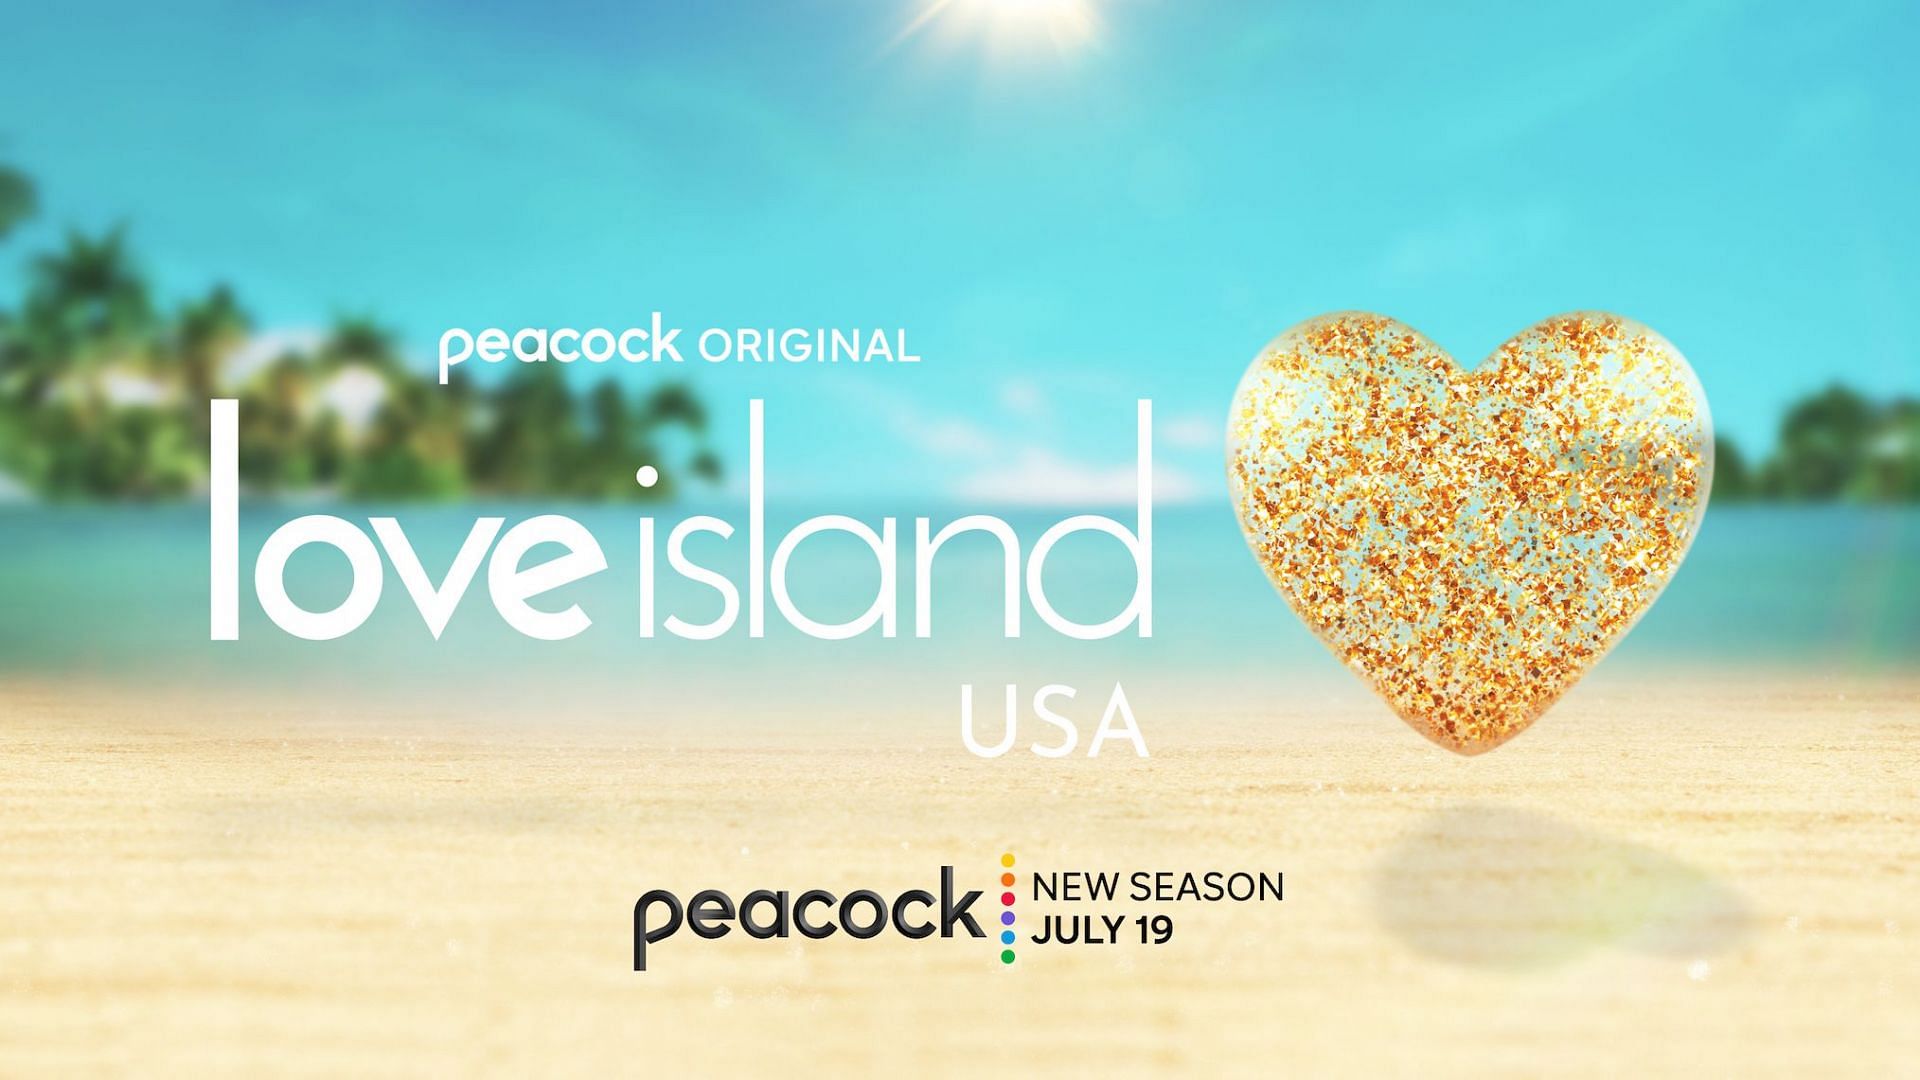 Love Island USA Season 4 premiering on July 19 (Image via Peacock)